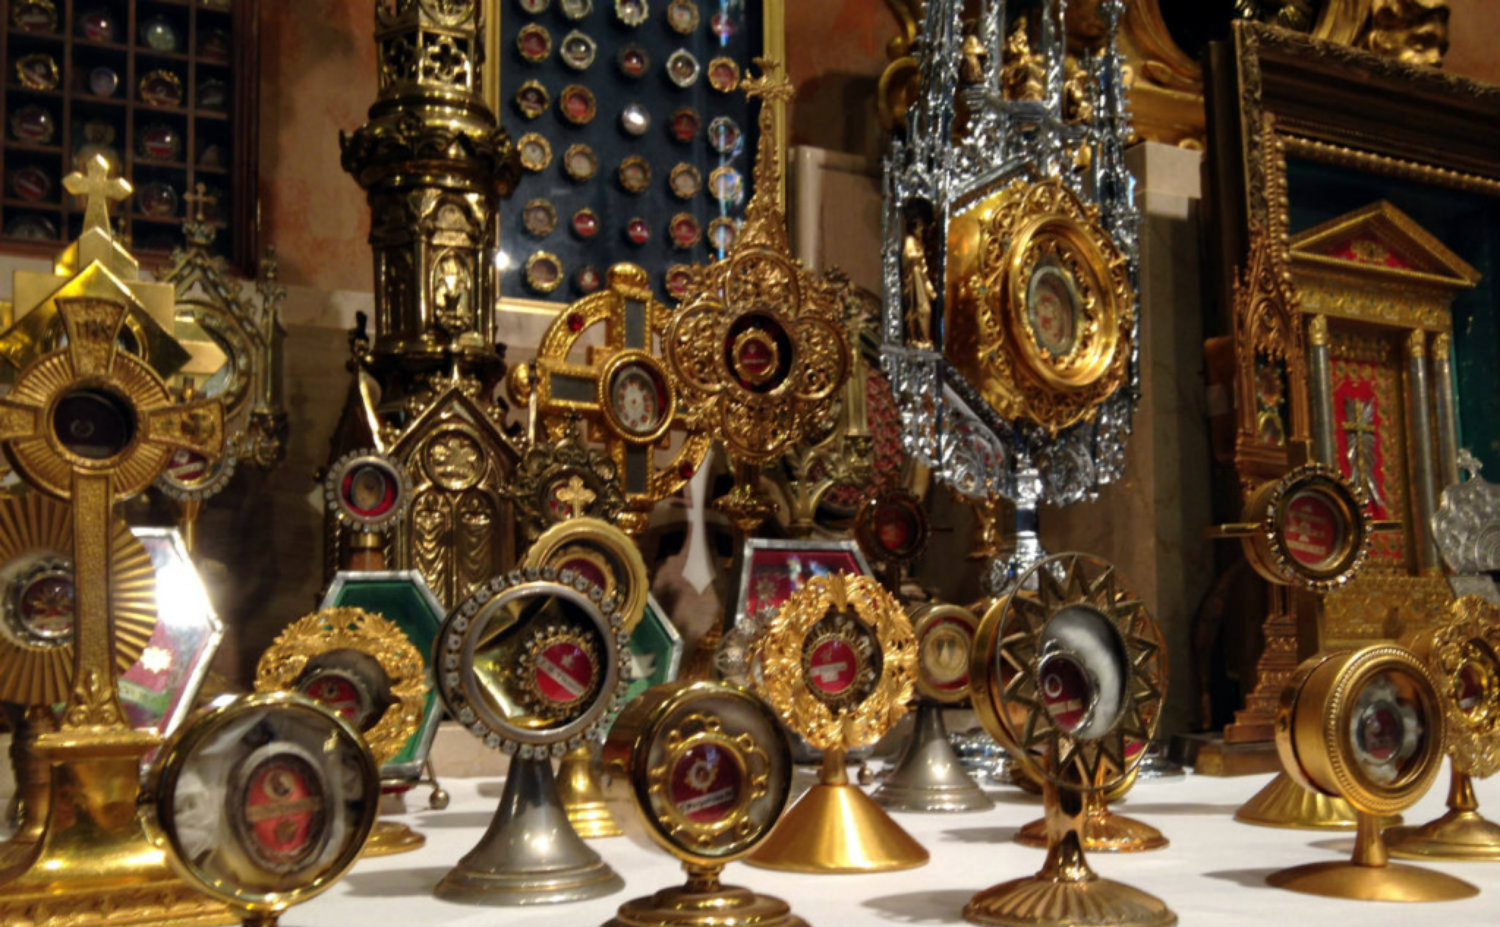 The Relic Collection of St. John Gualbert’s in Cheektowaga